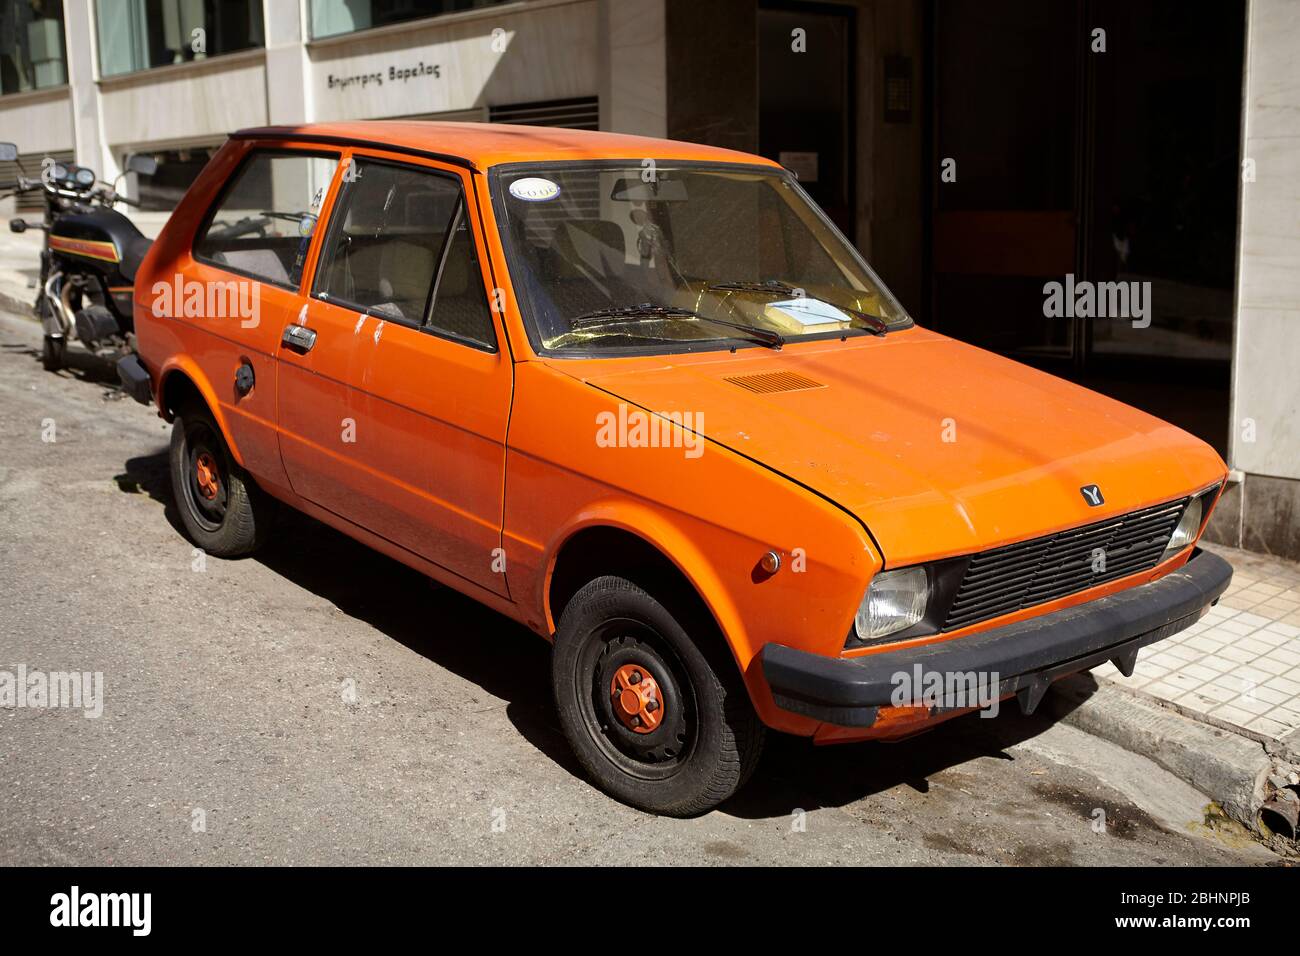 Yugo GV - coche naranja estacionado en la calle Foto de stock